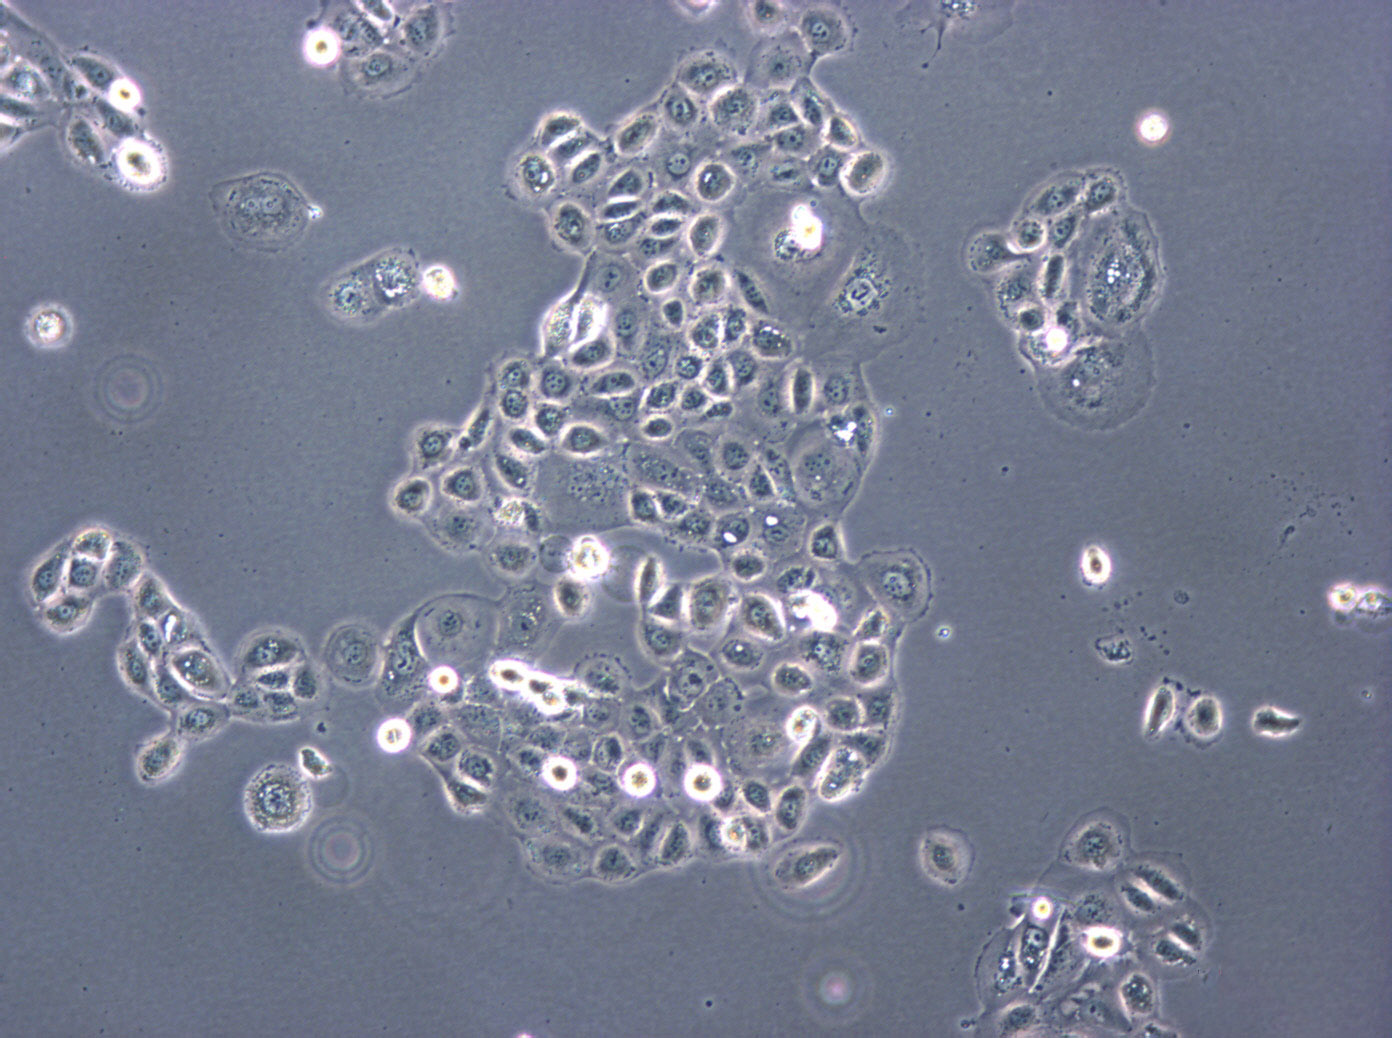 SV-HUC-1:人膀胱上皮永生化复苏细胞(提供STR鉴定图谱)